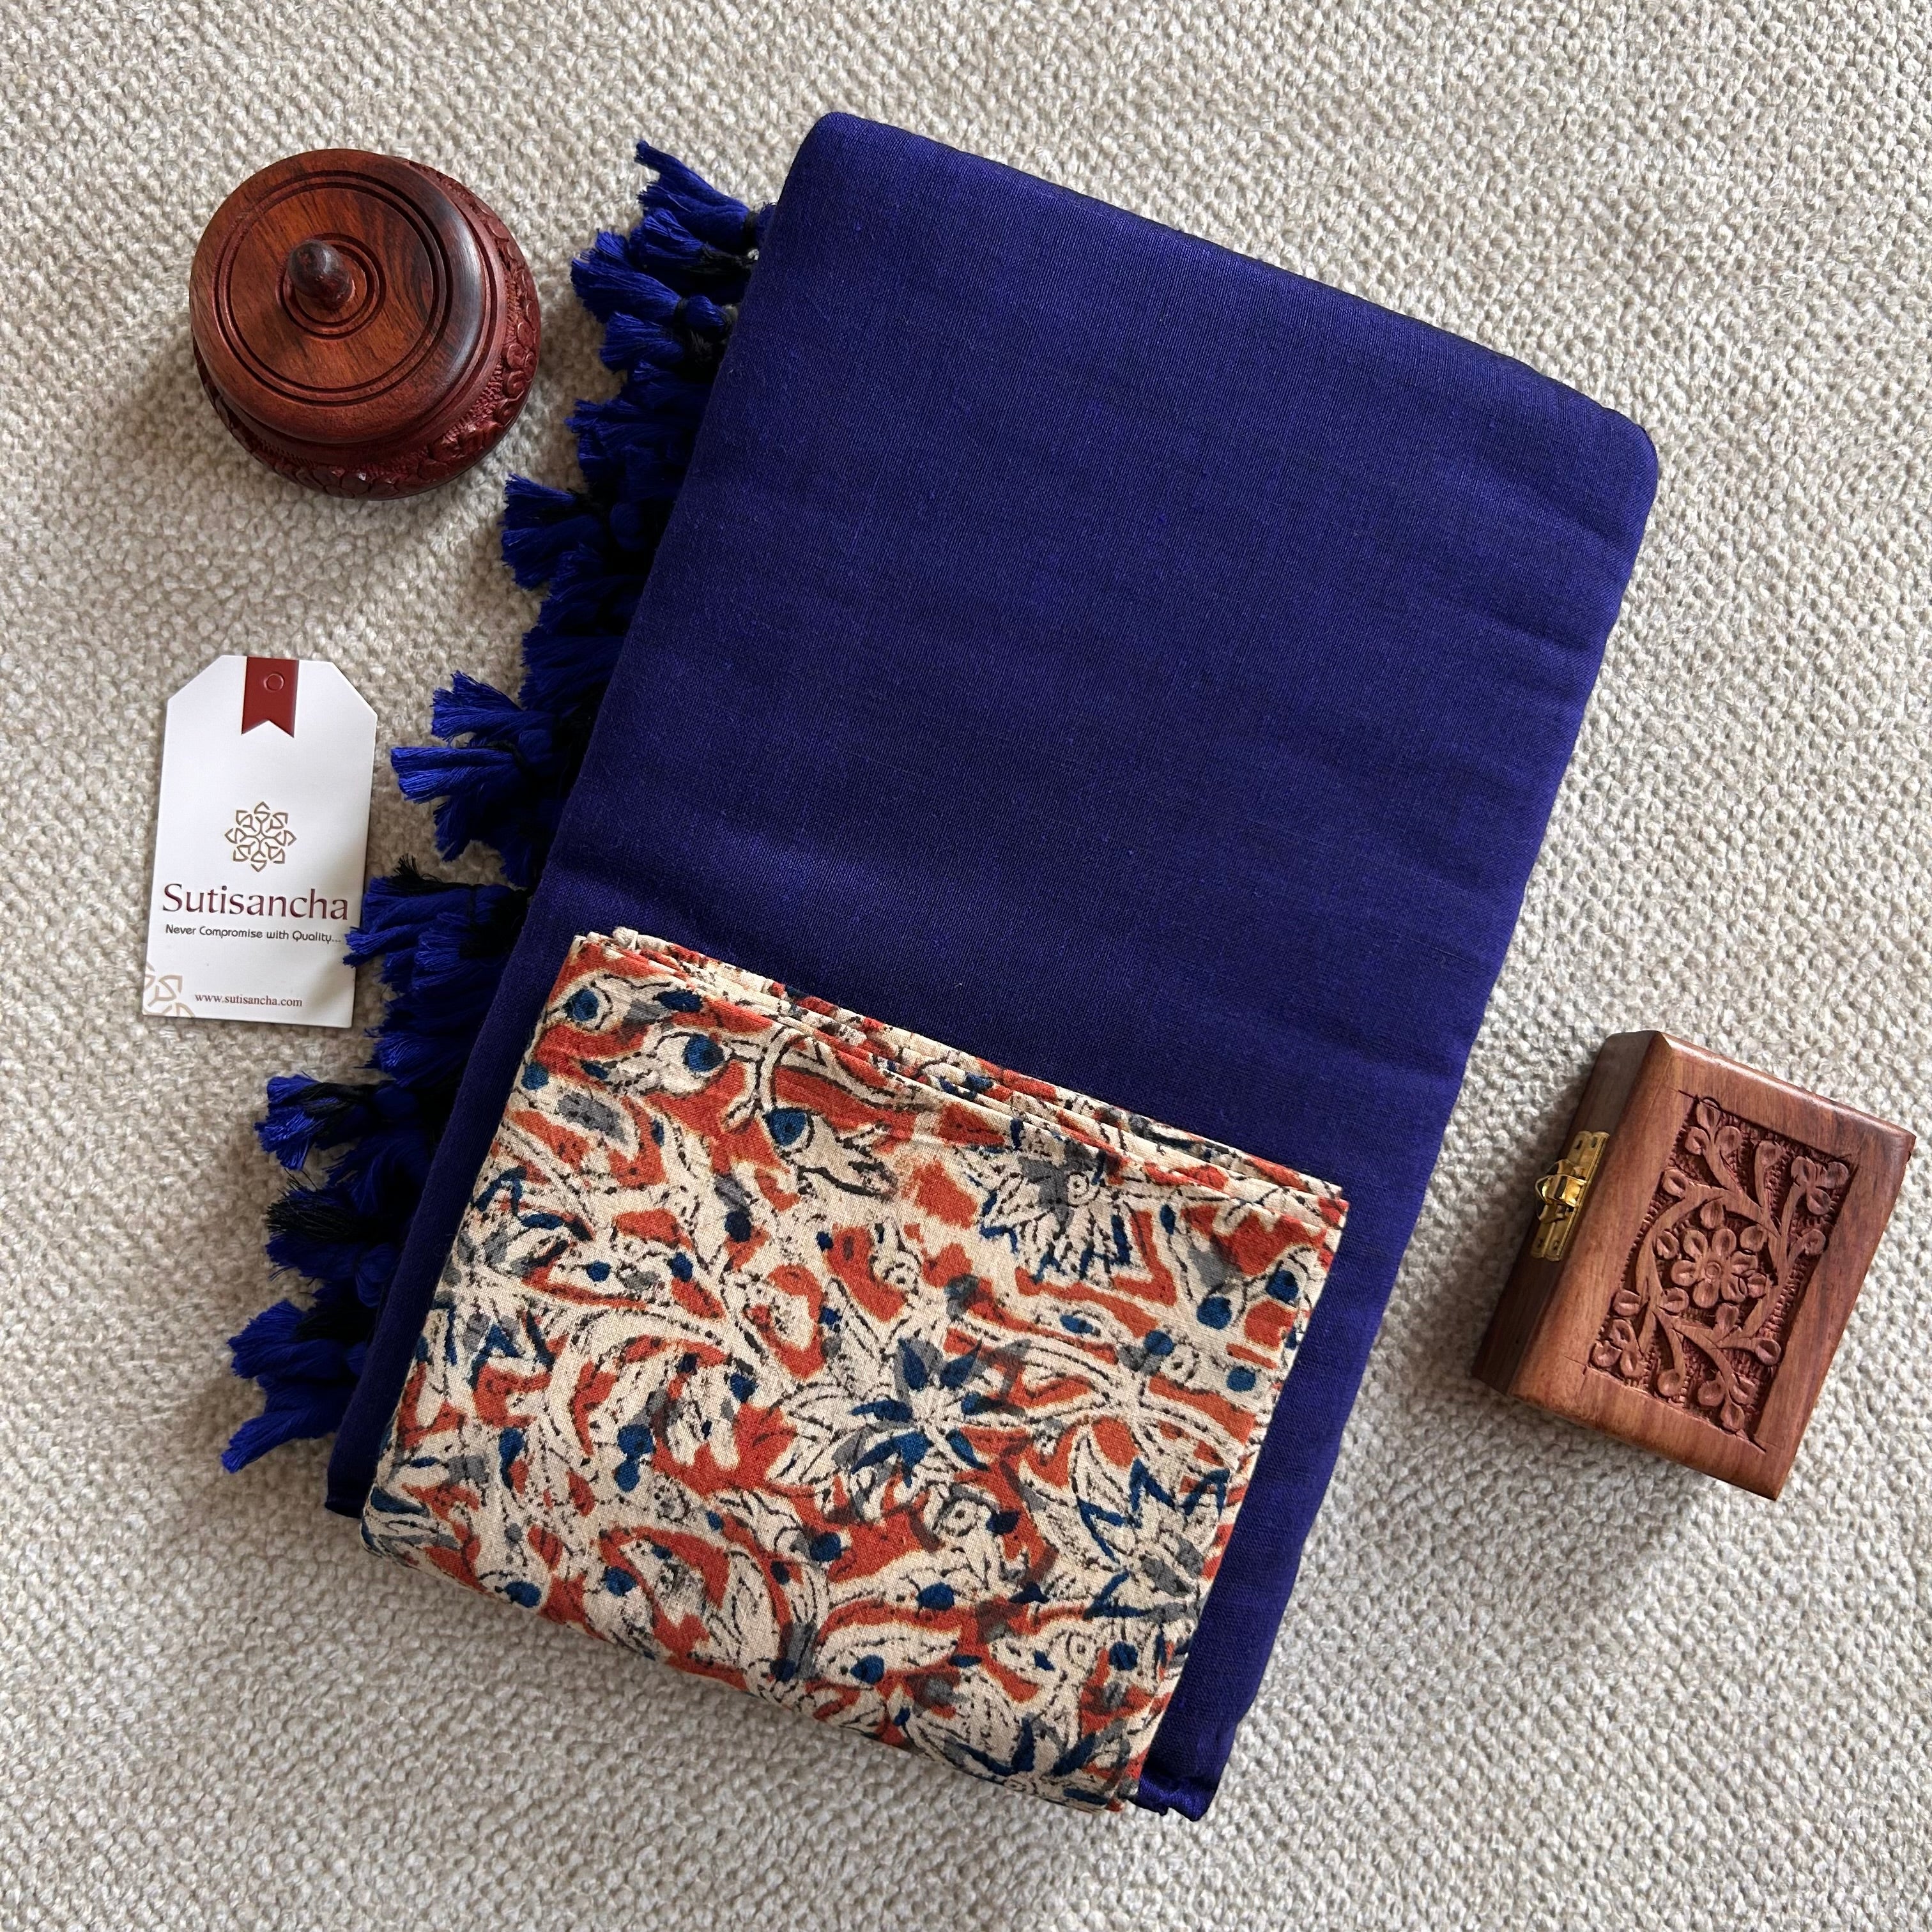 Sutisancha Royal Blue Handloom Cotton Saree With Blouse